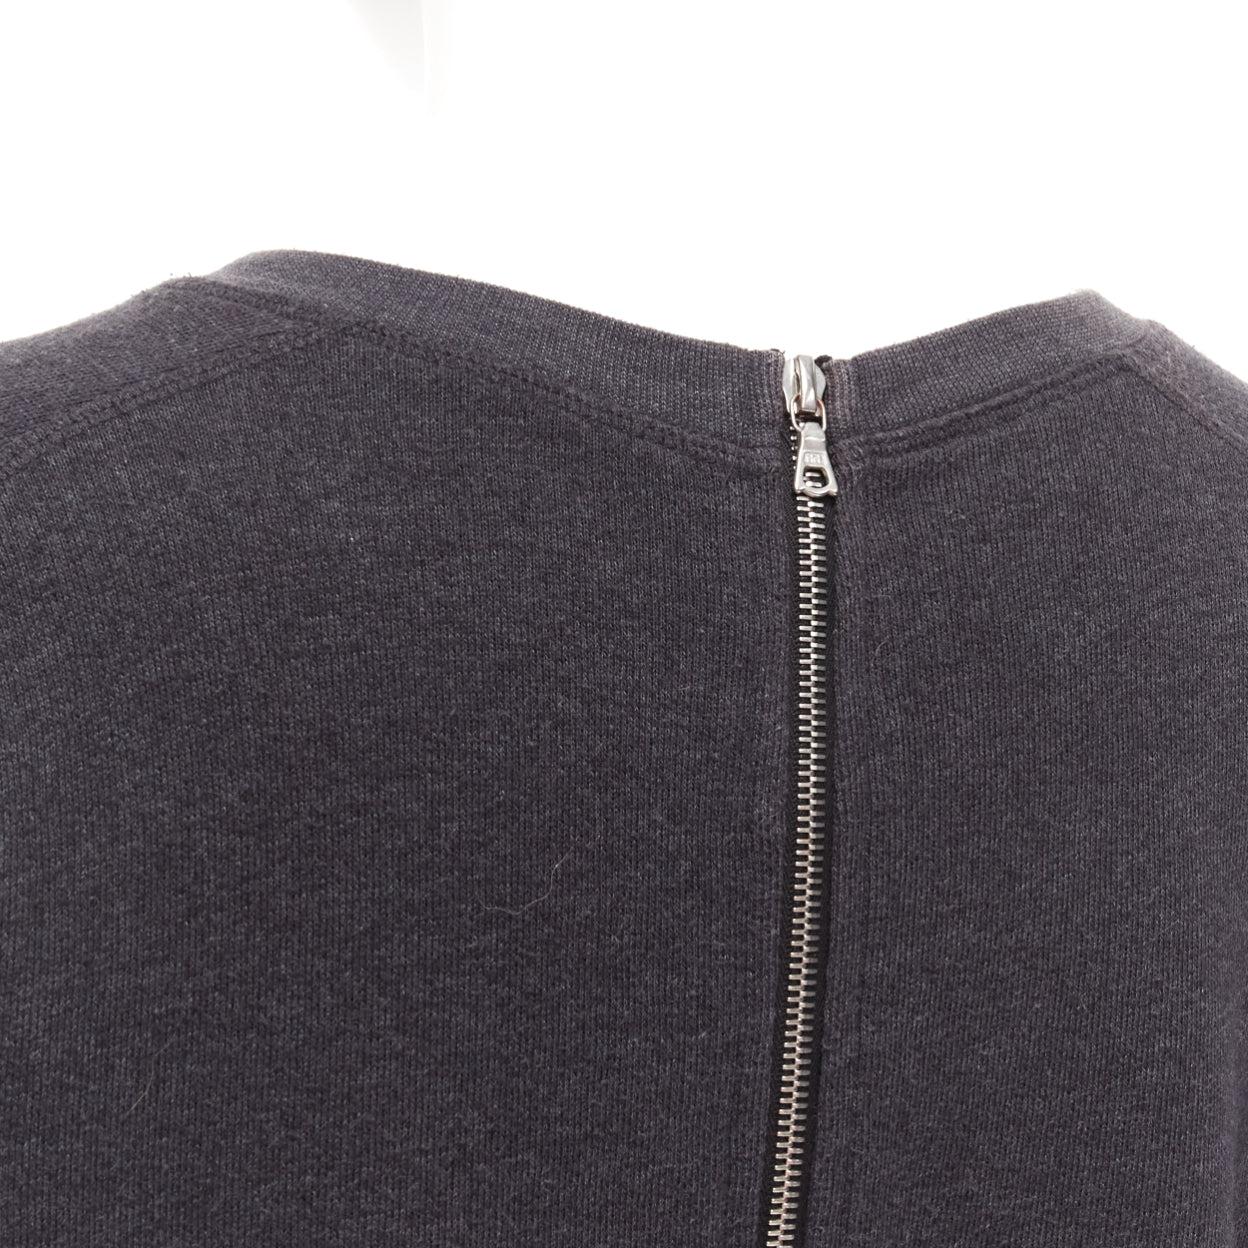 DRIES VAN NOTEN grey cotton blend silver zip back pullover sweater S For Sale 1